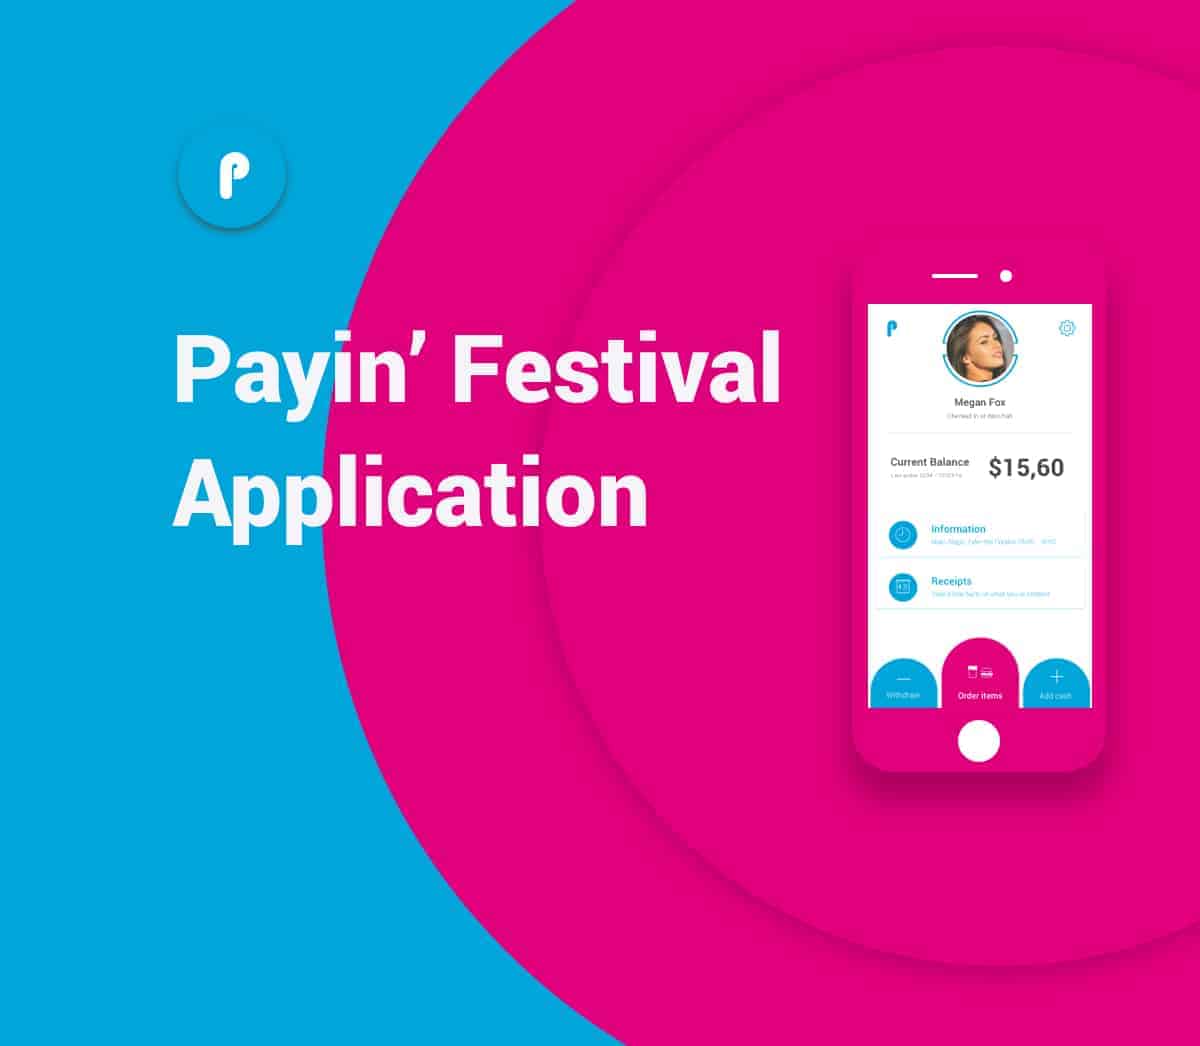 Payin' Festival Application